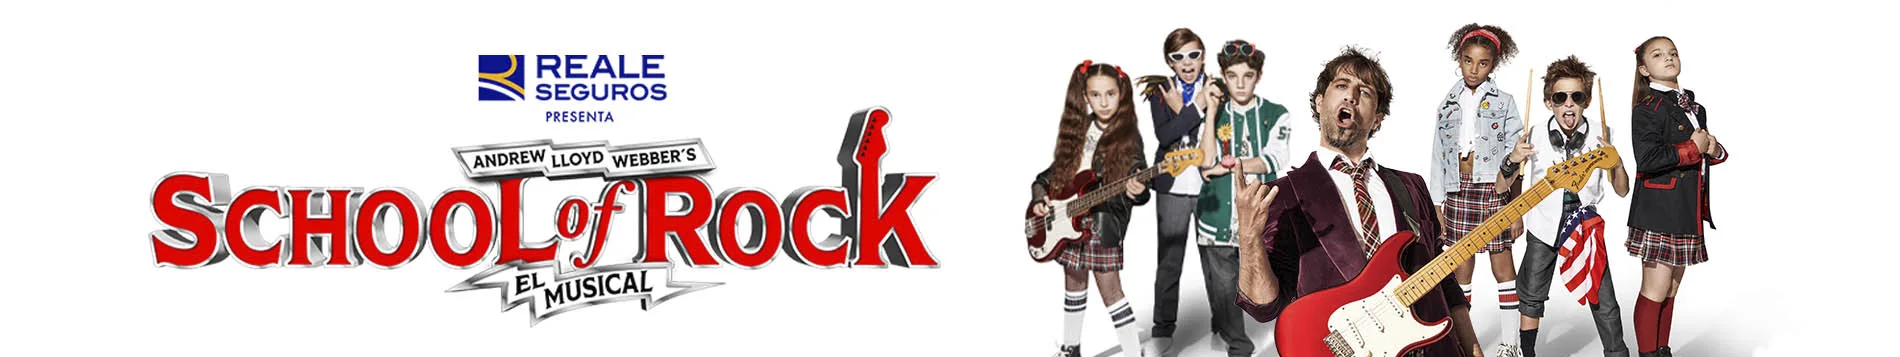 School of rock, el musical